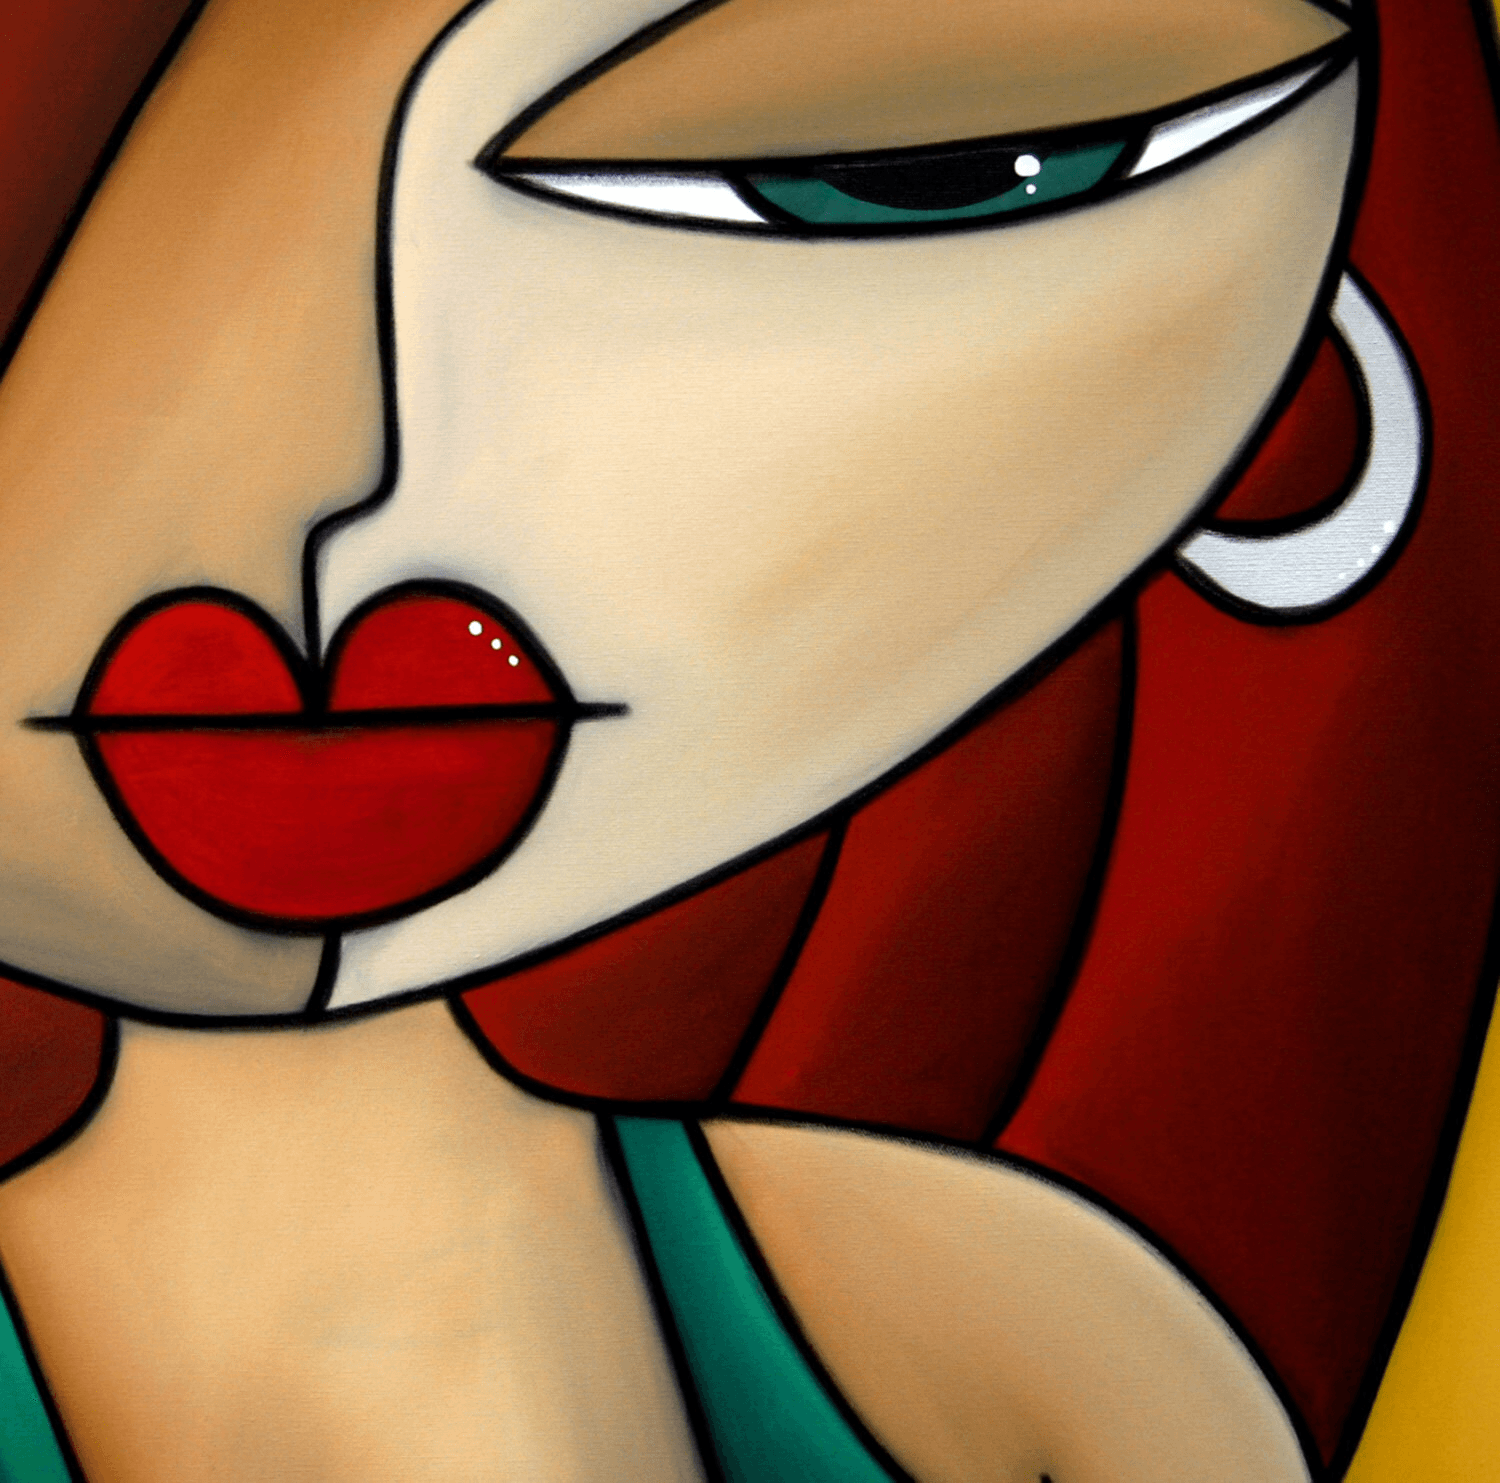 Pop art abstract woman canvas print - Intensity - Thomasfedro